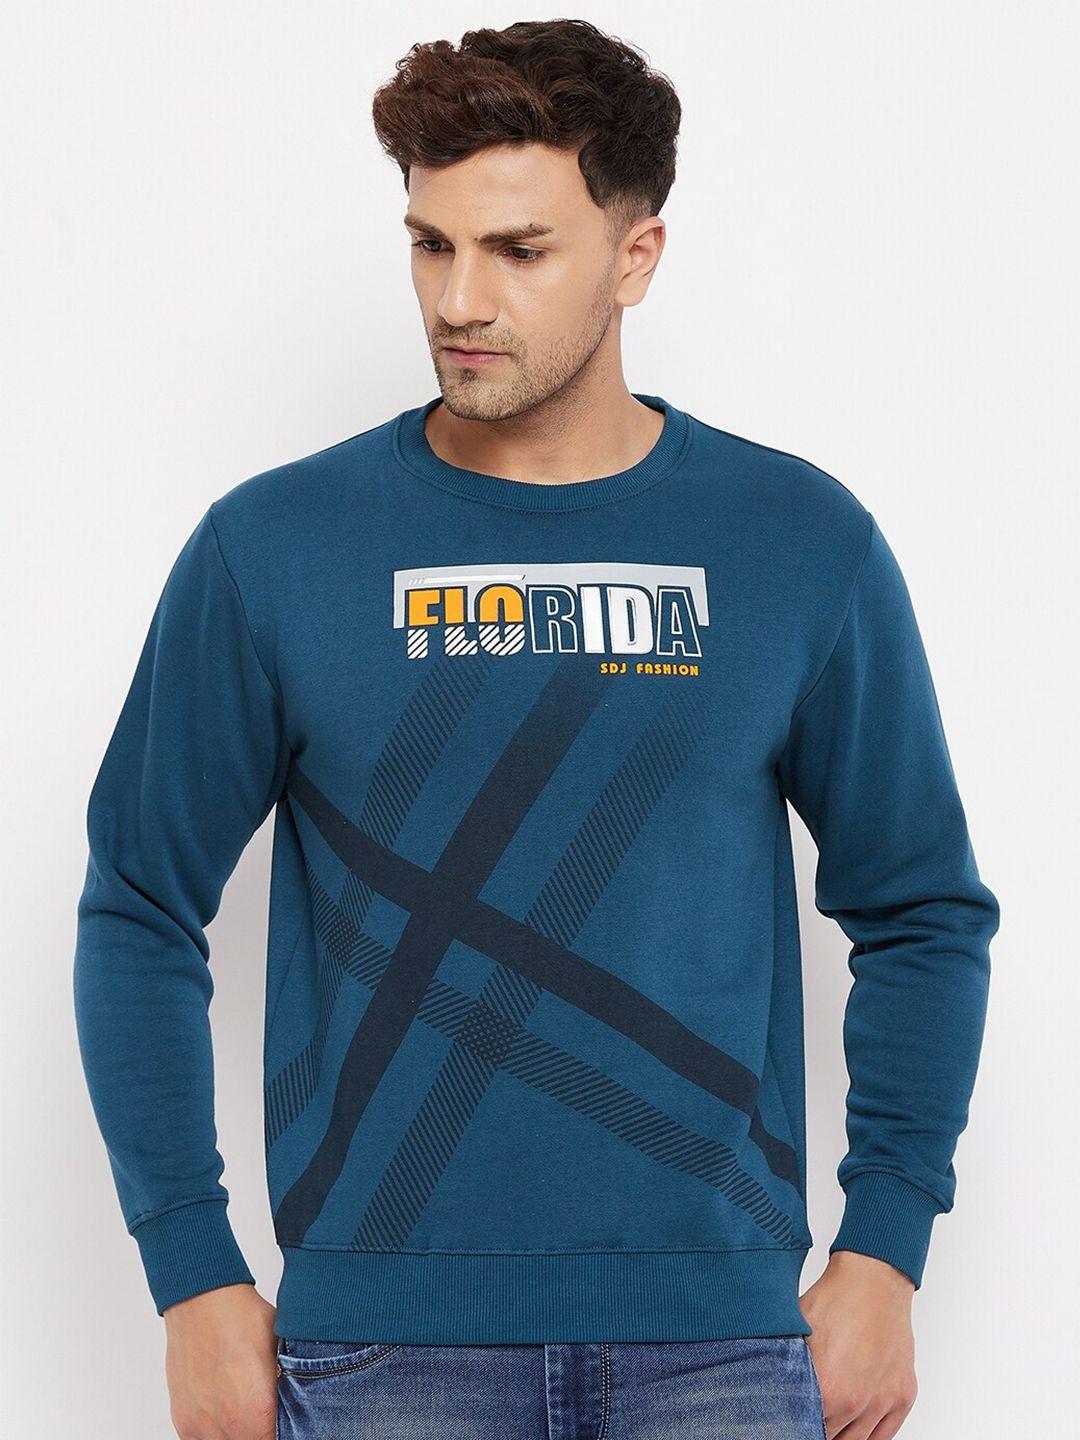 duke-men-teal-printed-fleece-sweatshirt